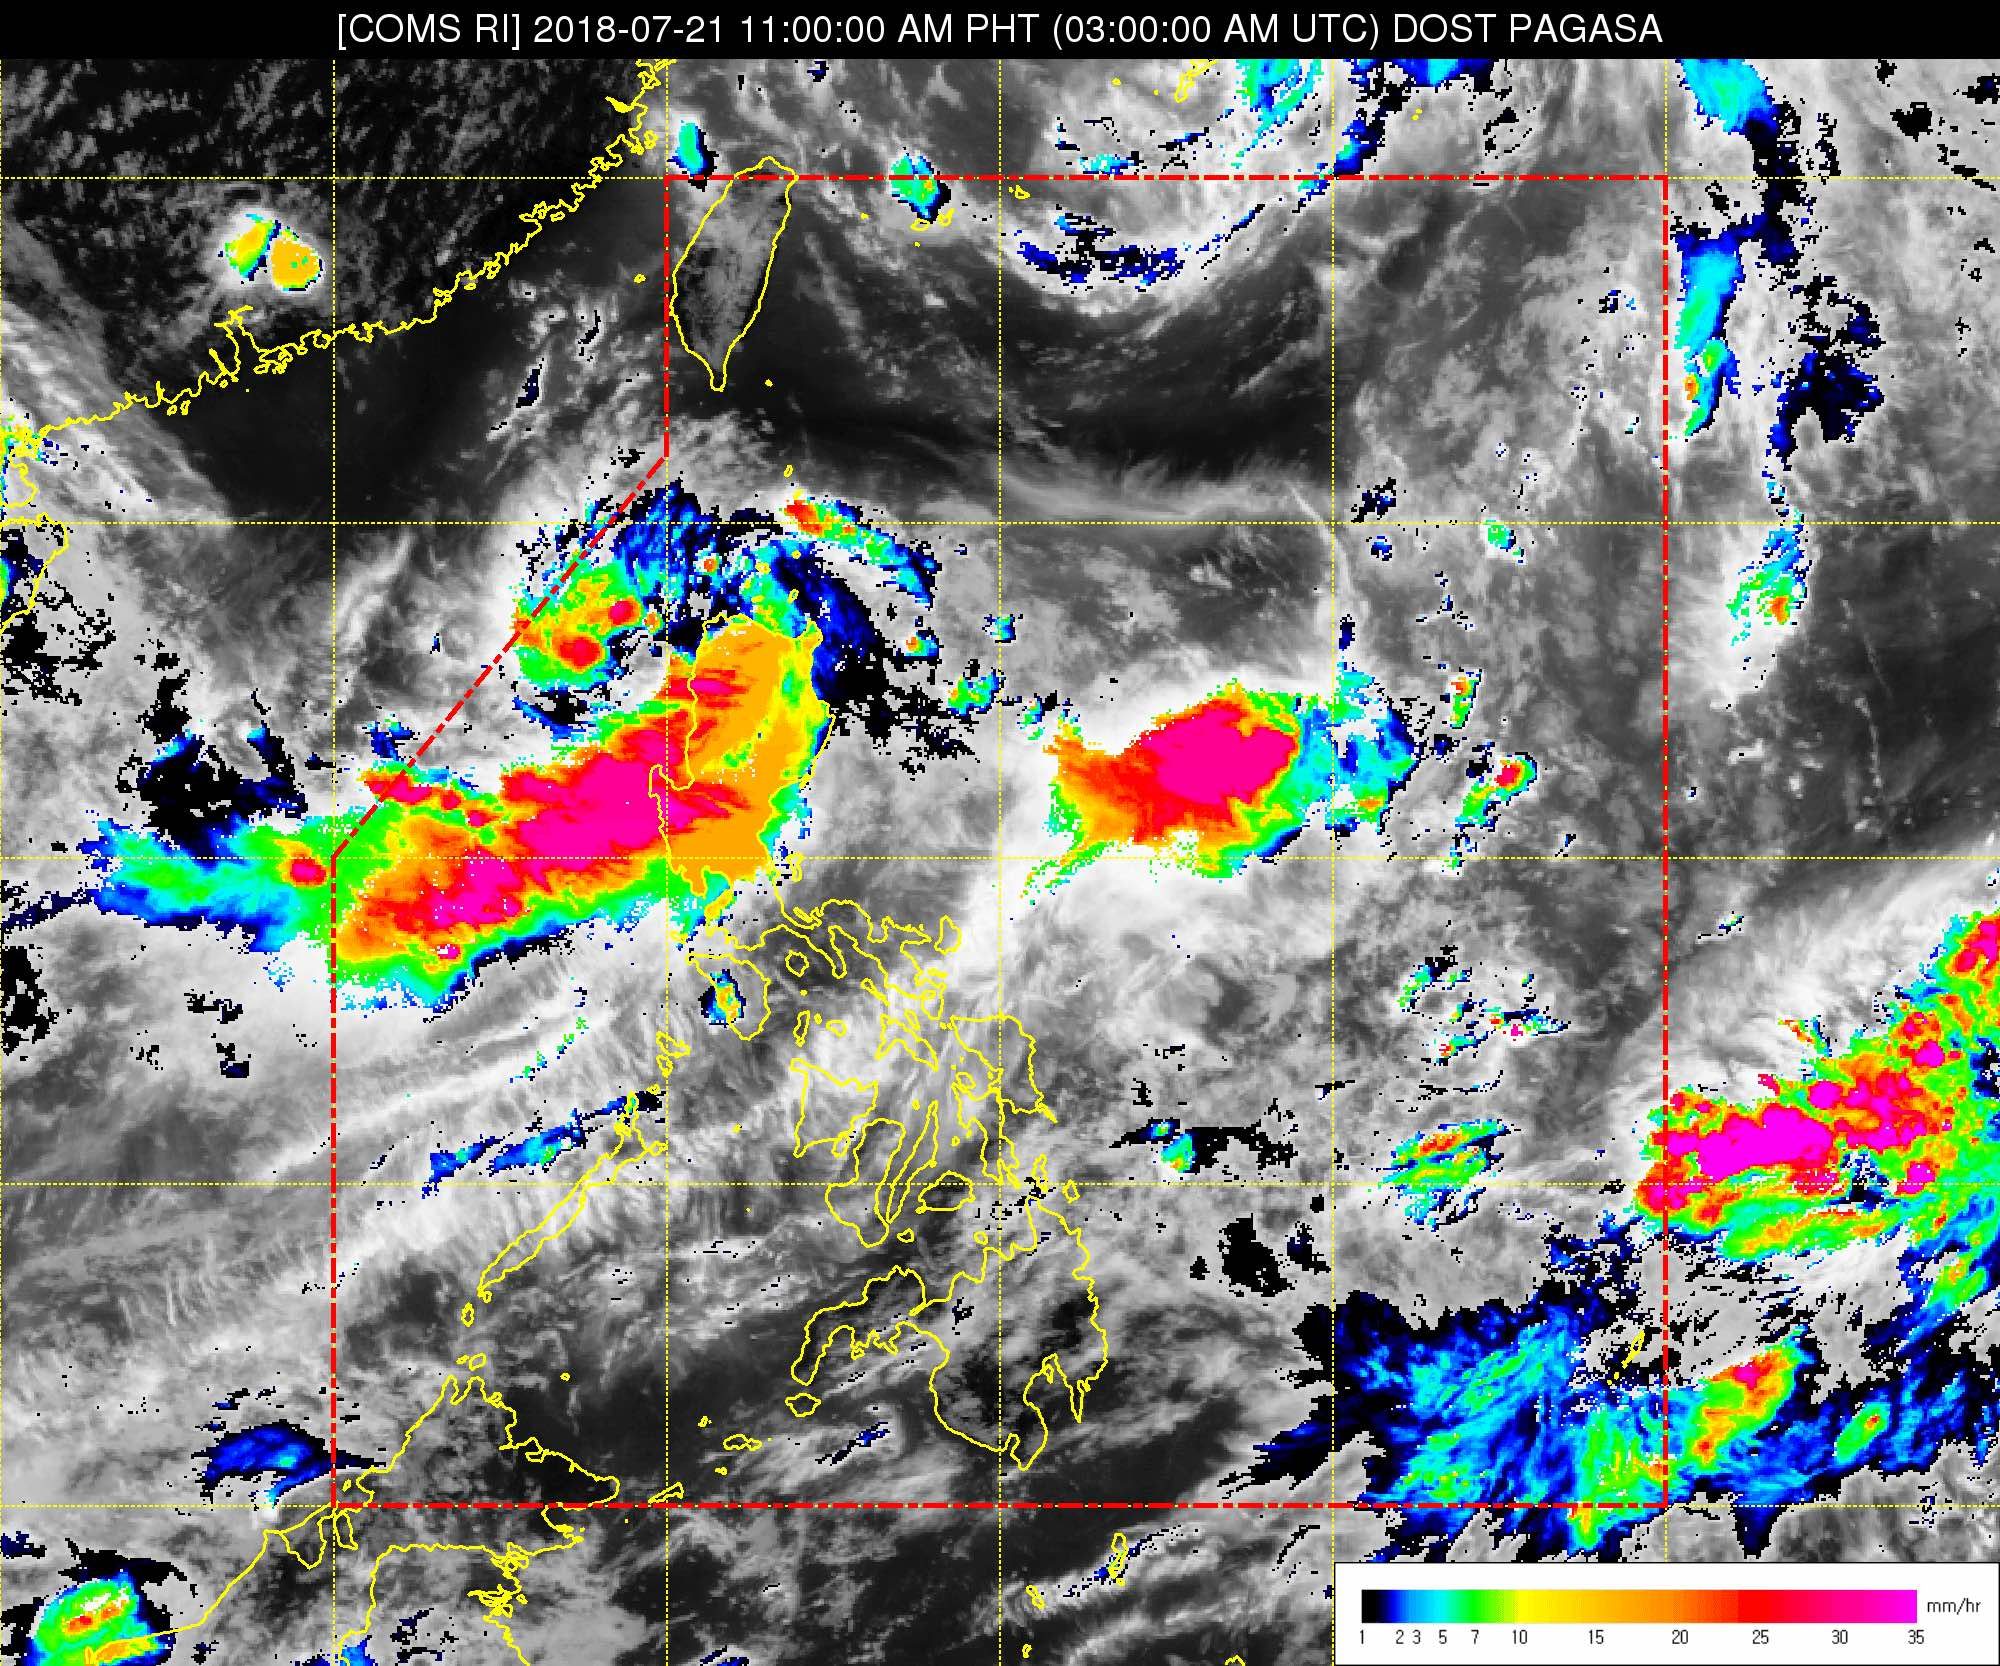 LPA now Tropical Depression Josie, enhancing monsoon